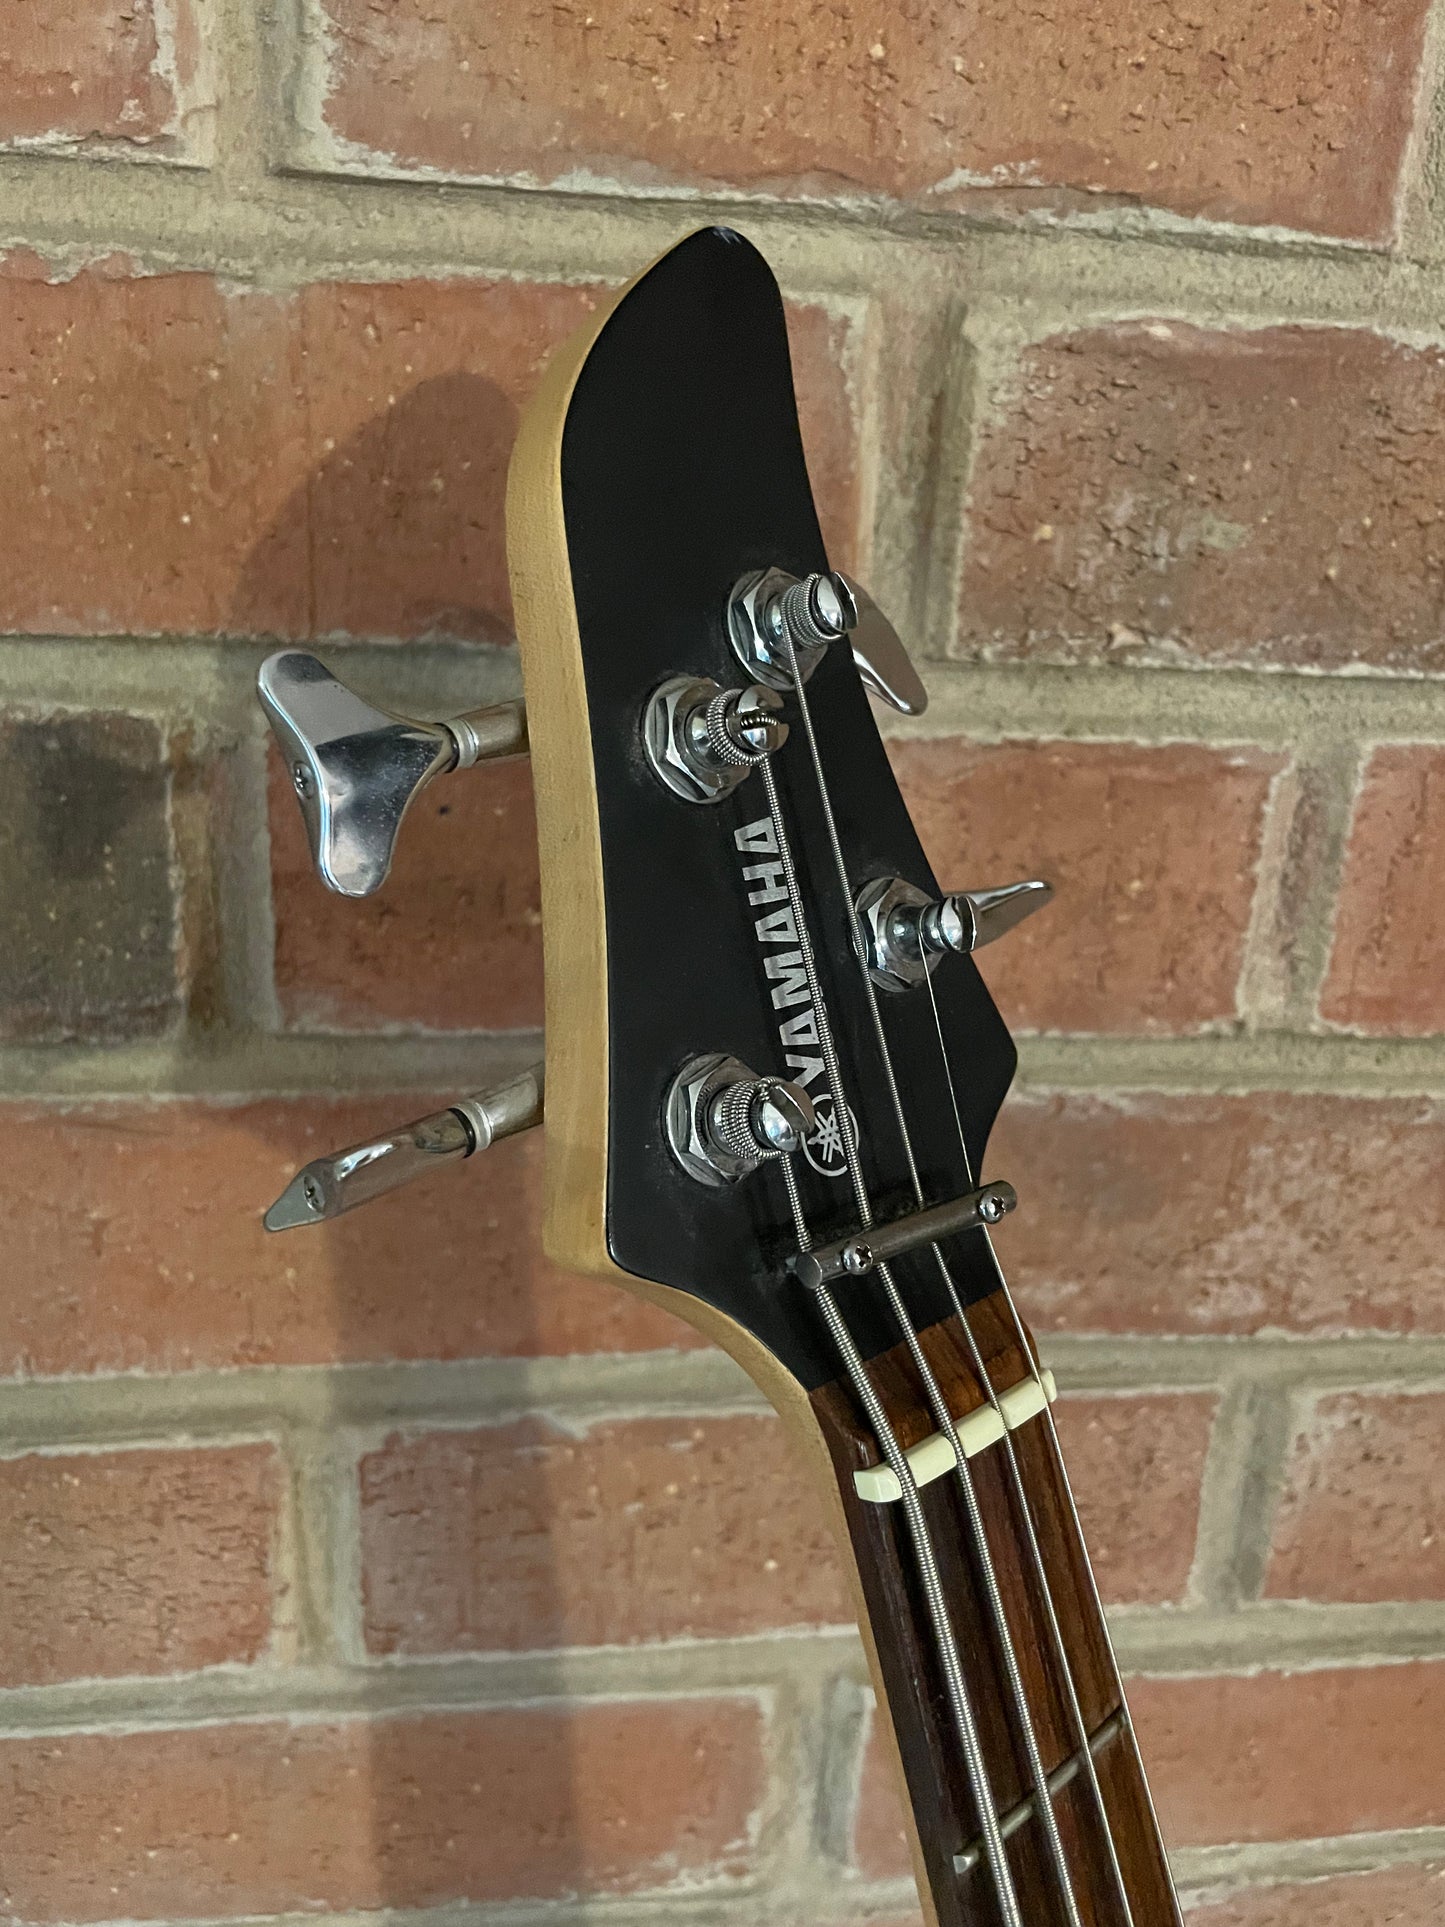 Yamaha Bass Guitar